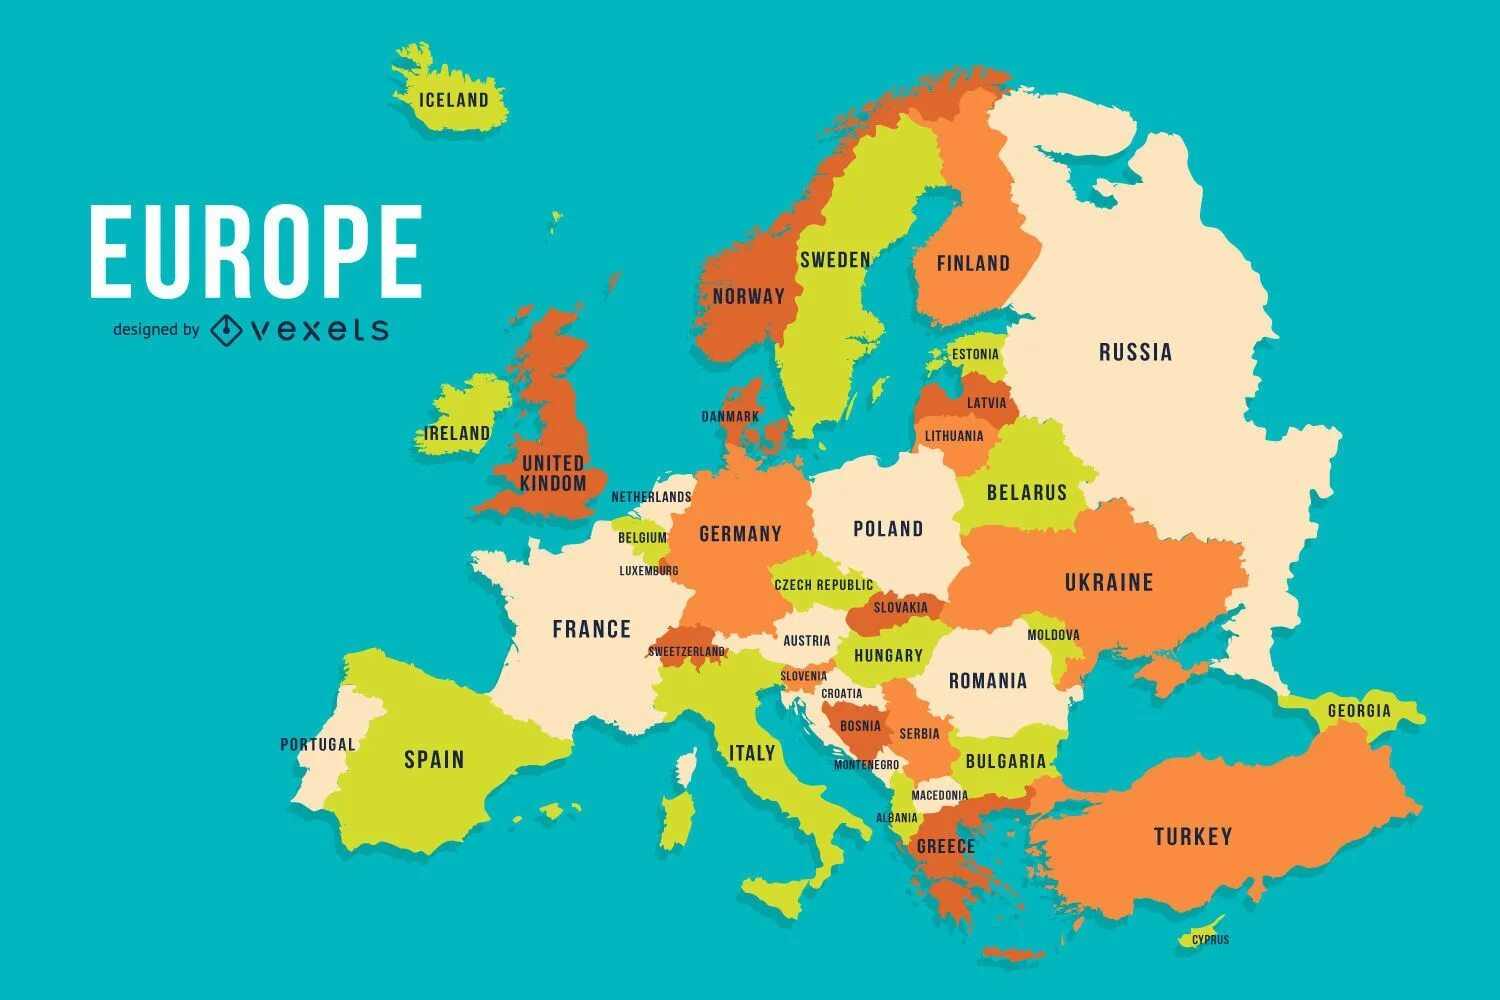 Europa ru. Карта - Европа. Карта Европы со странами. Карта европейского континента. Карта European Countries.